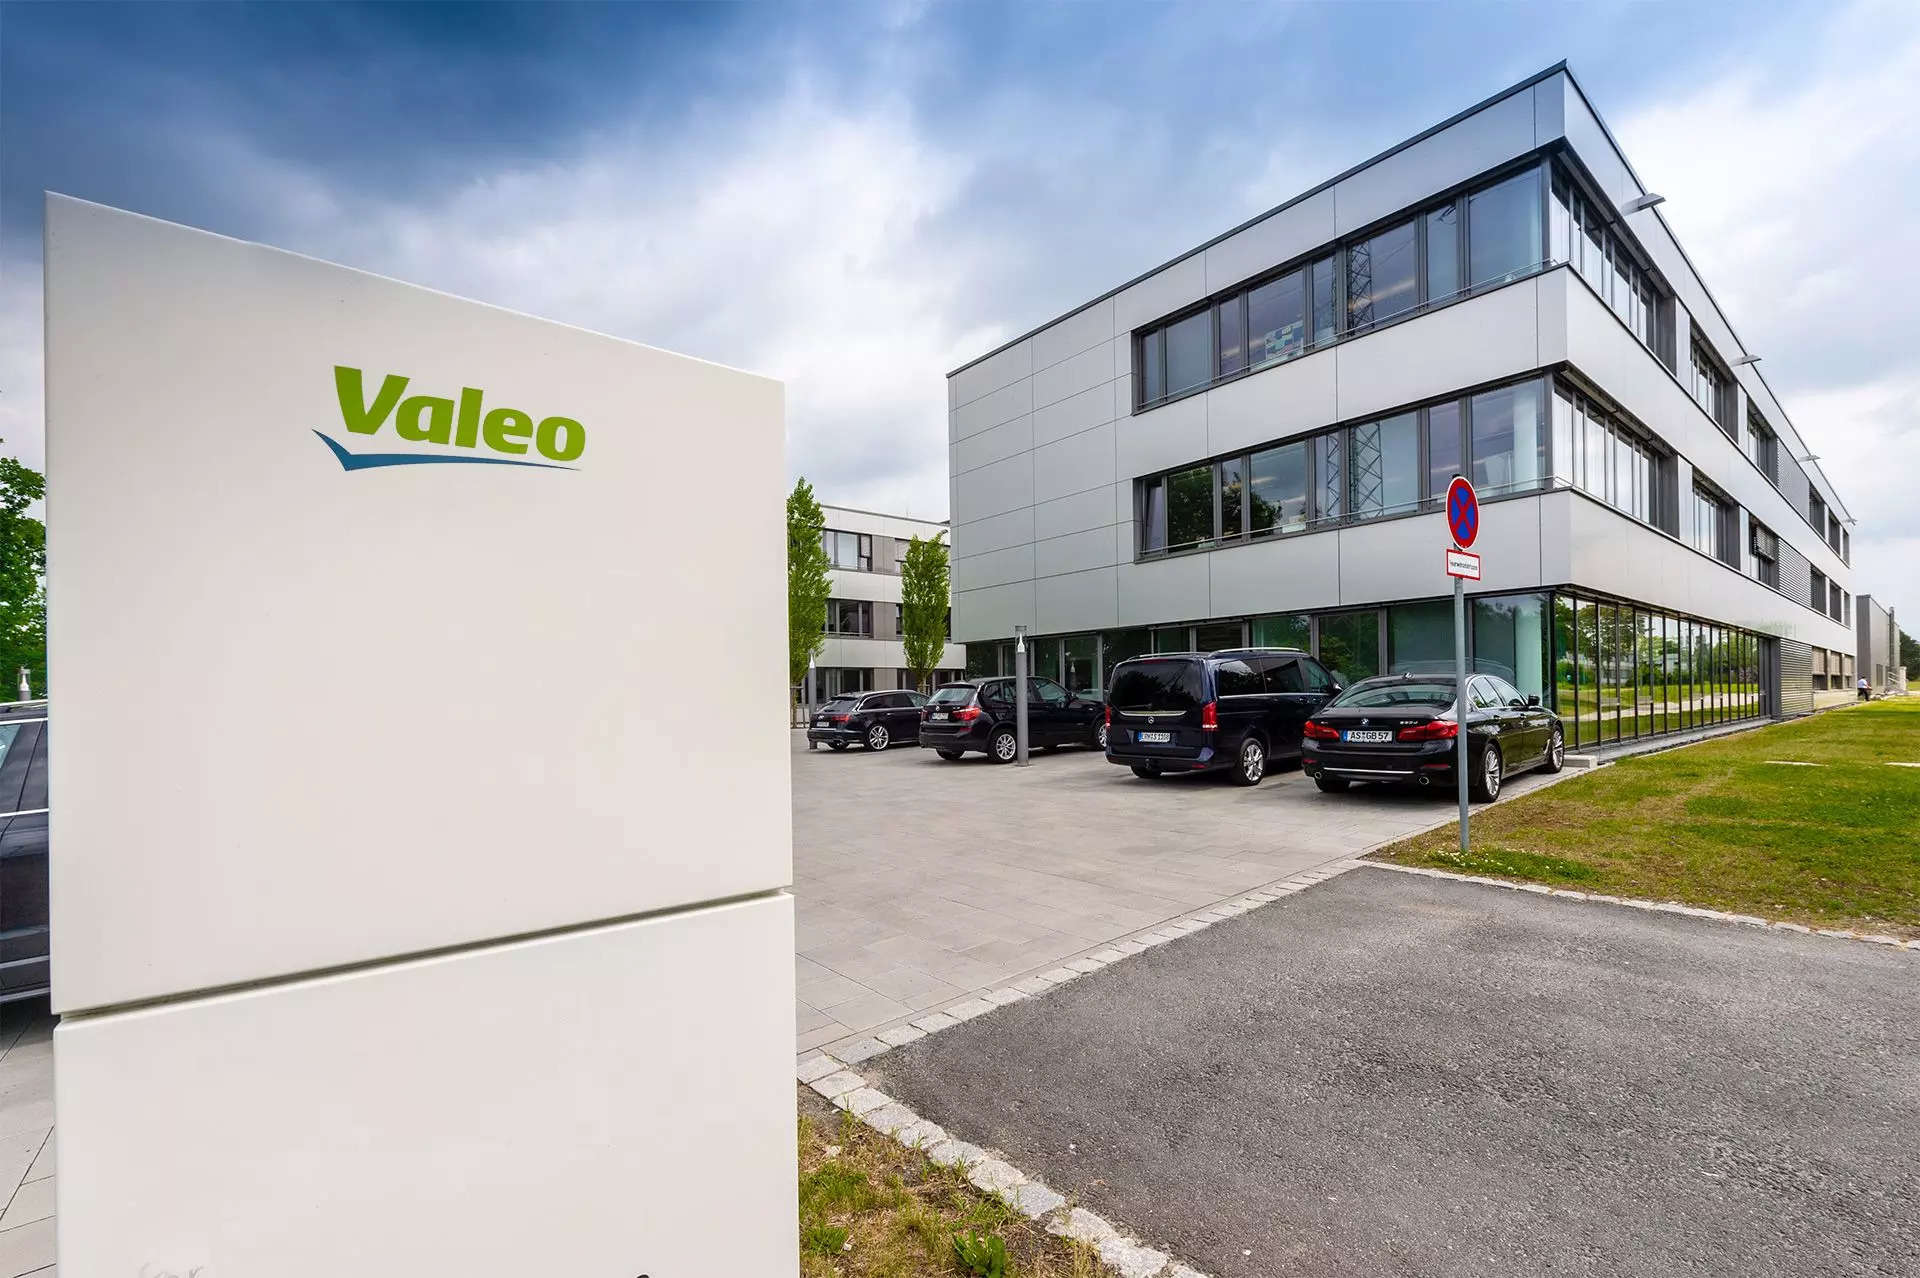 Valeo Q1 sales jump driven by powertrain systems arm, Auto News, ET Auto